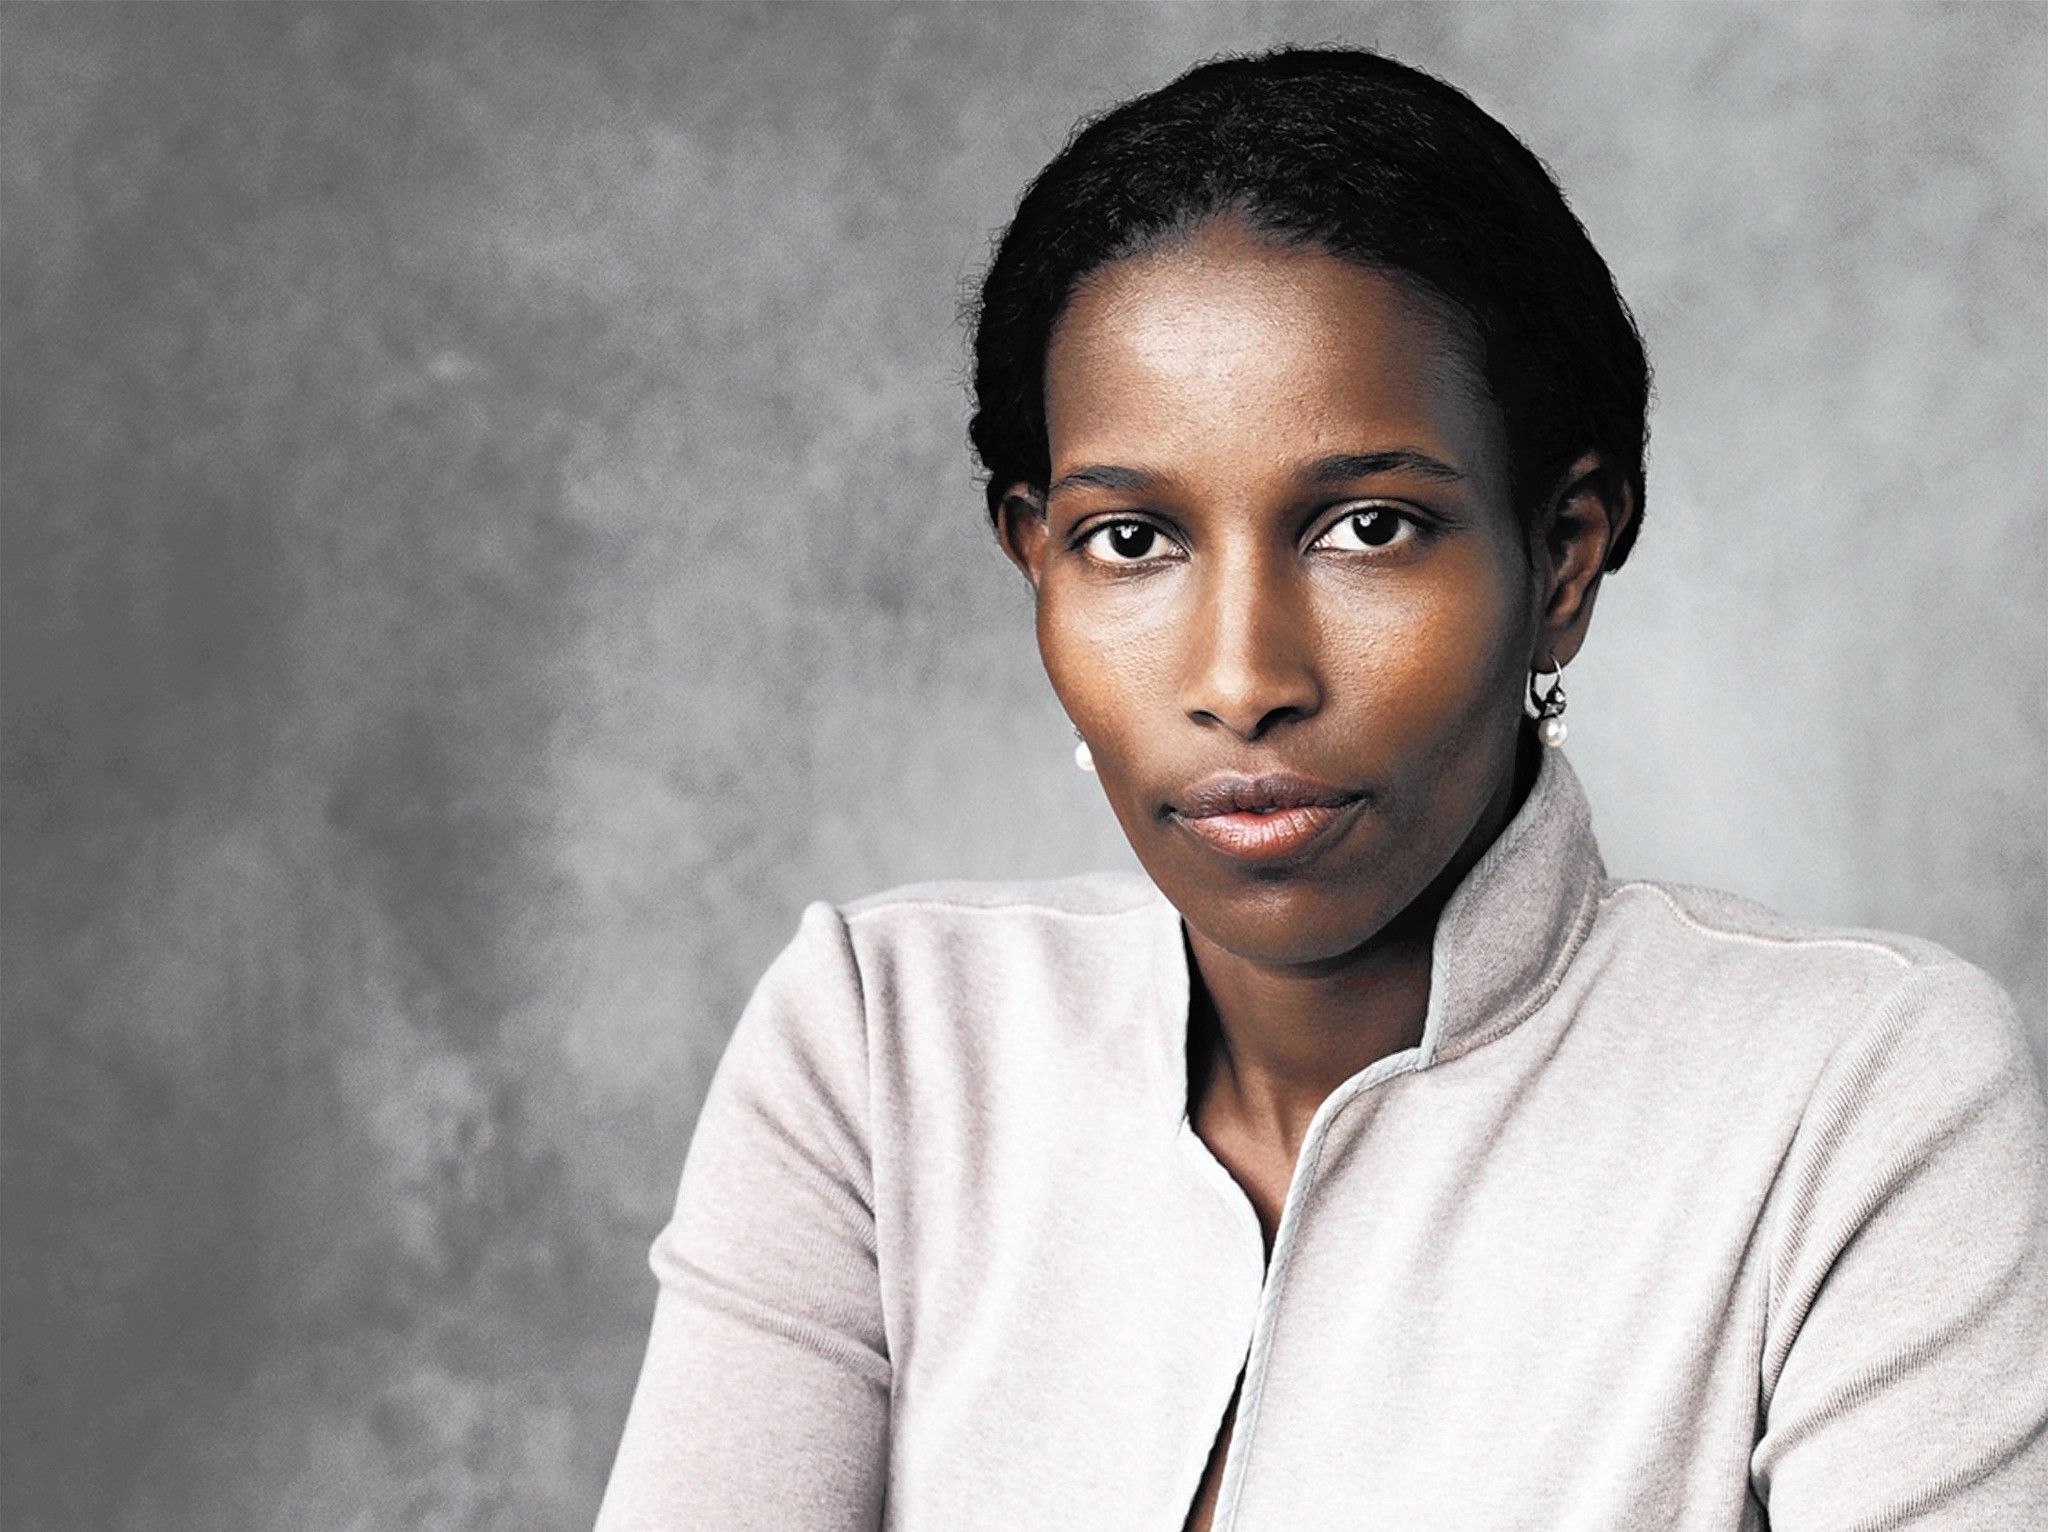 Belajar dari ‘Kemurtadan’ Perempuan; Refleksi Buku Biografi Ayaan Hirsi Ali (Part I)